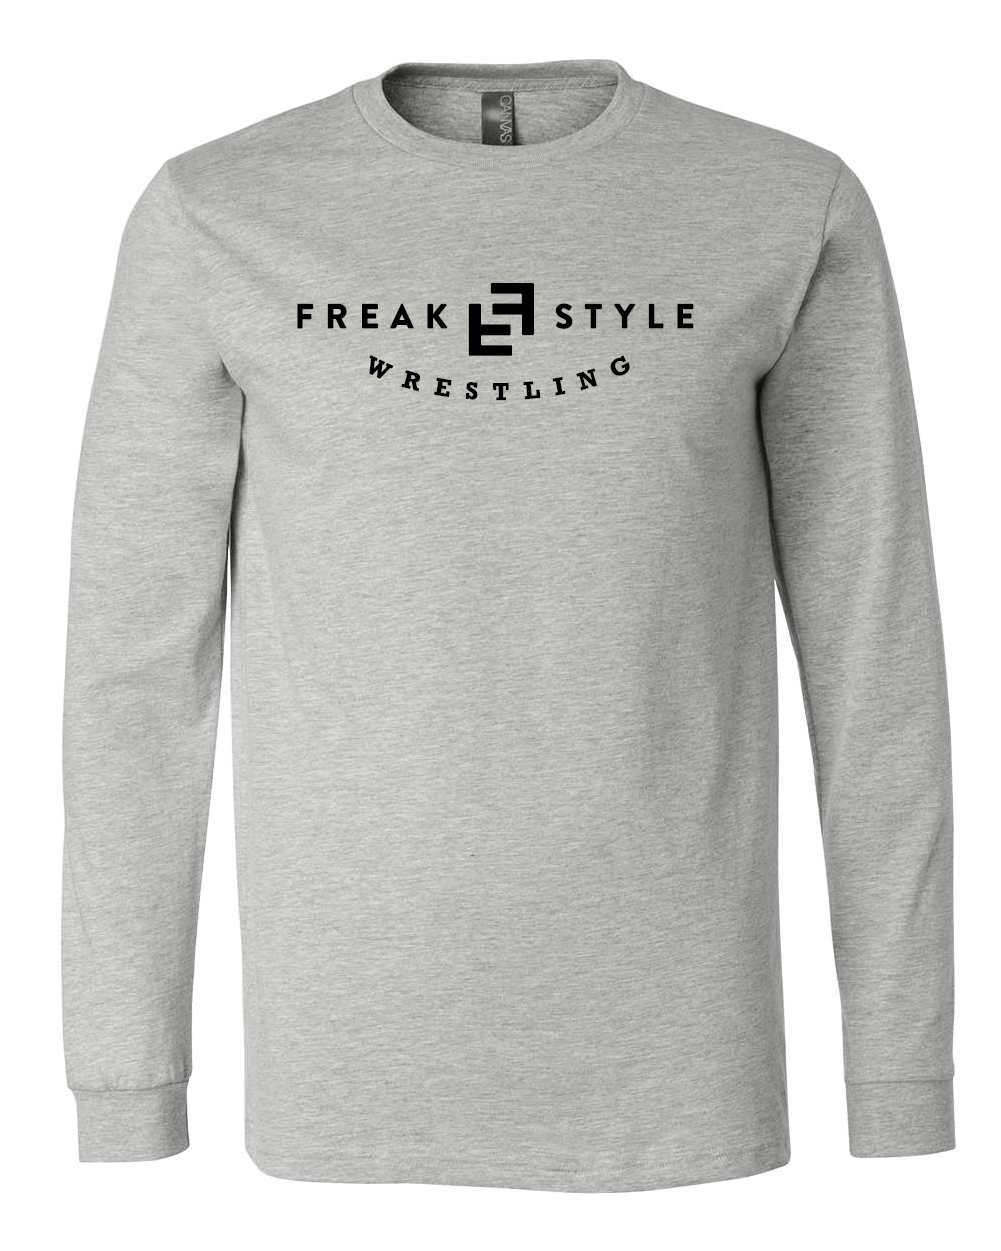 Freakstyle Logo (Soft Style Short Sleeve and Long Sleeve)